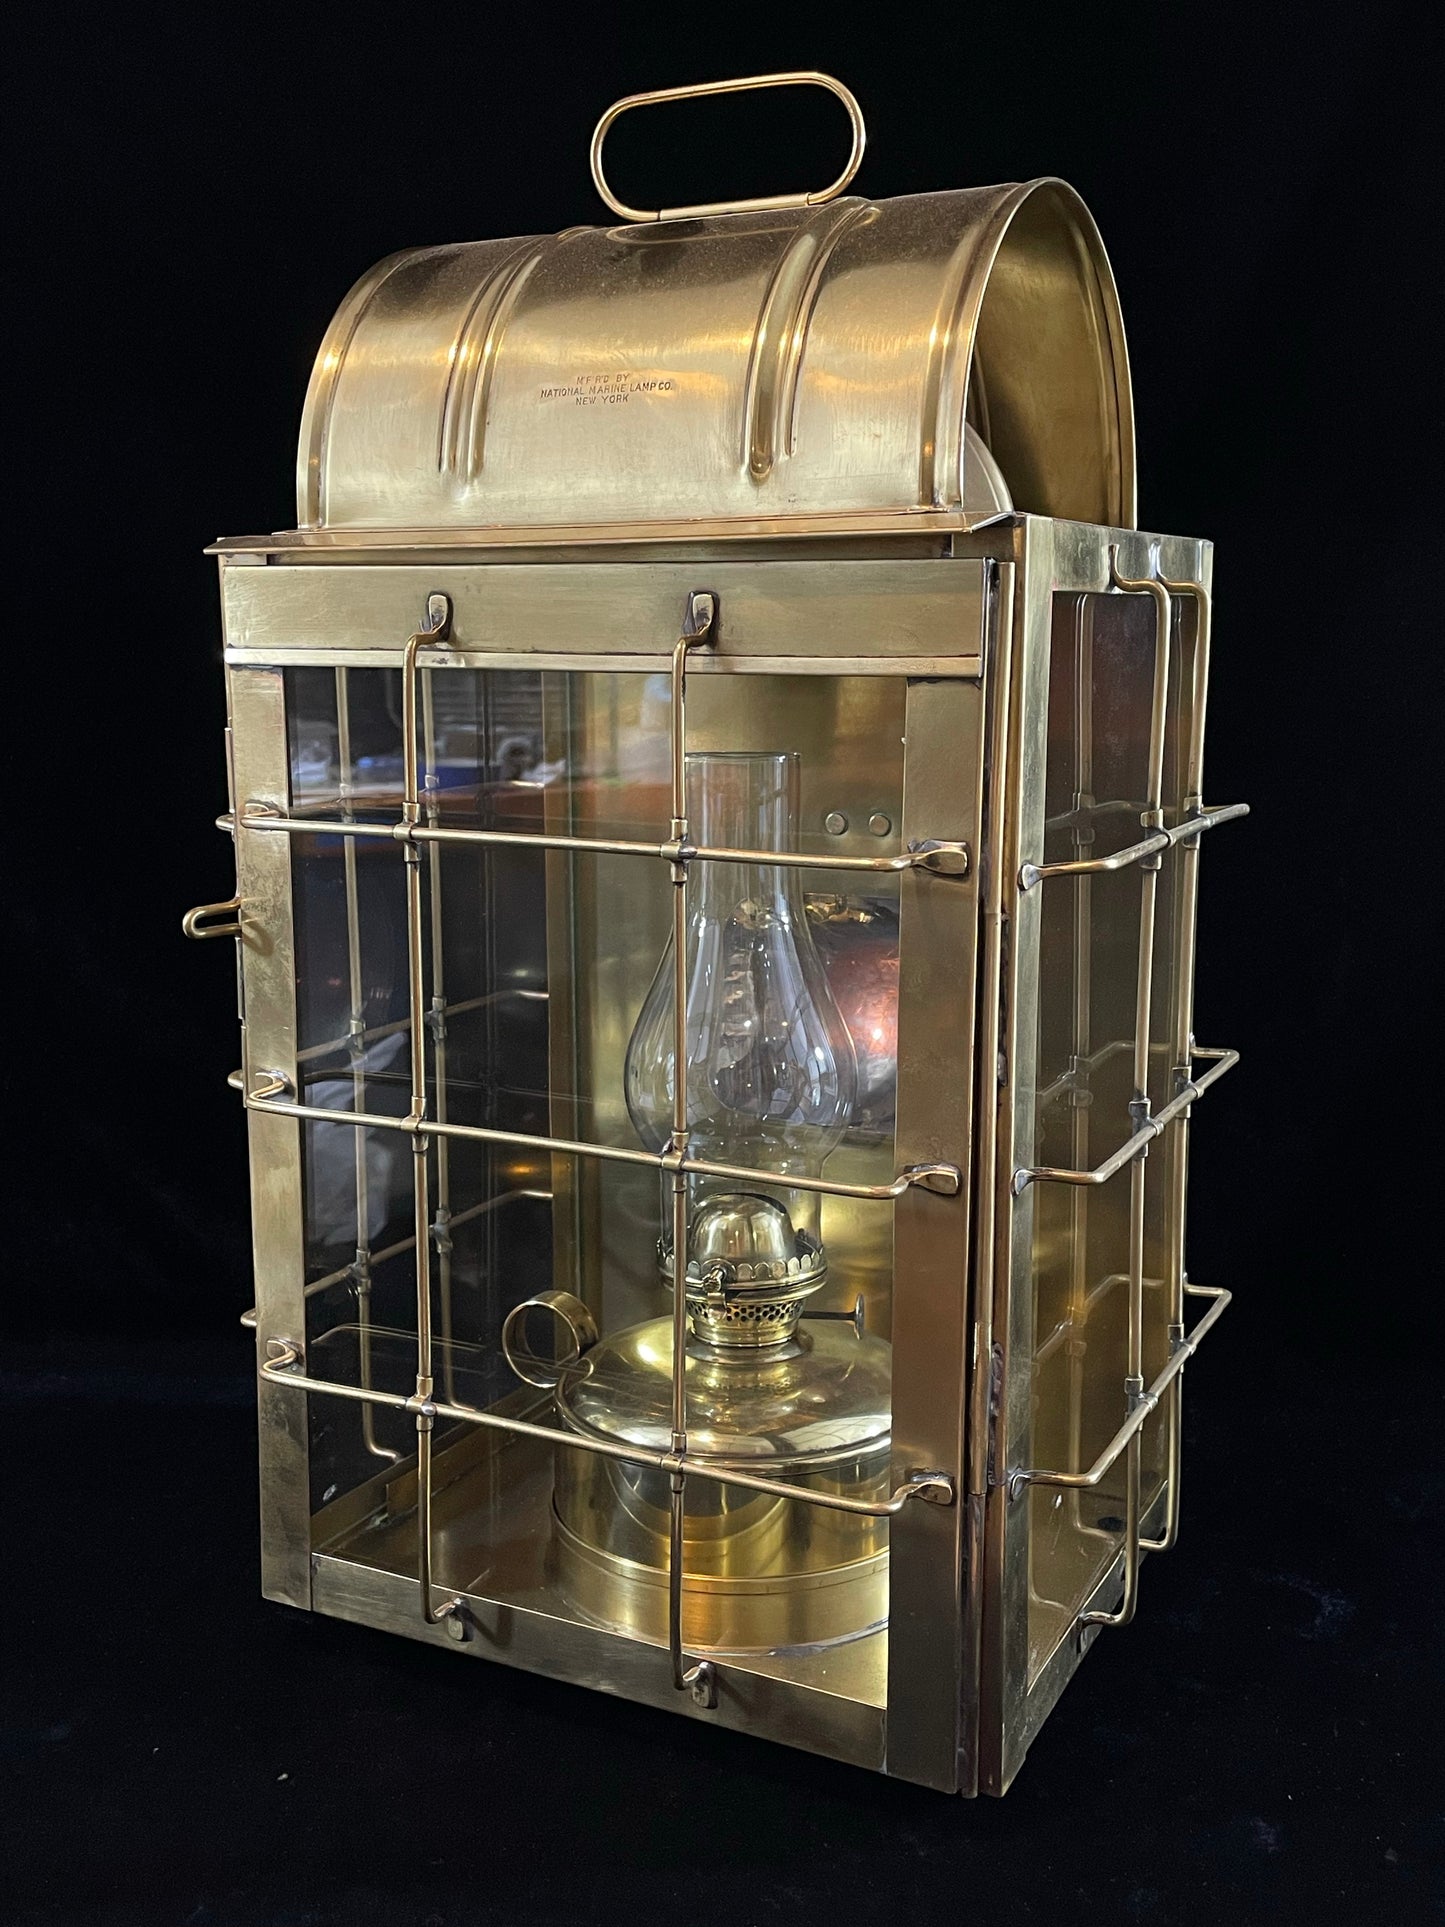 Cabin Lantern mfg'd by National Marine Lamp Company, 1912-1932